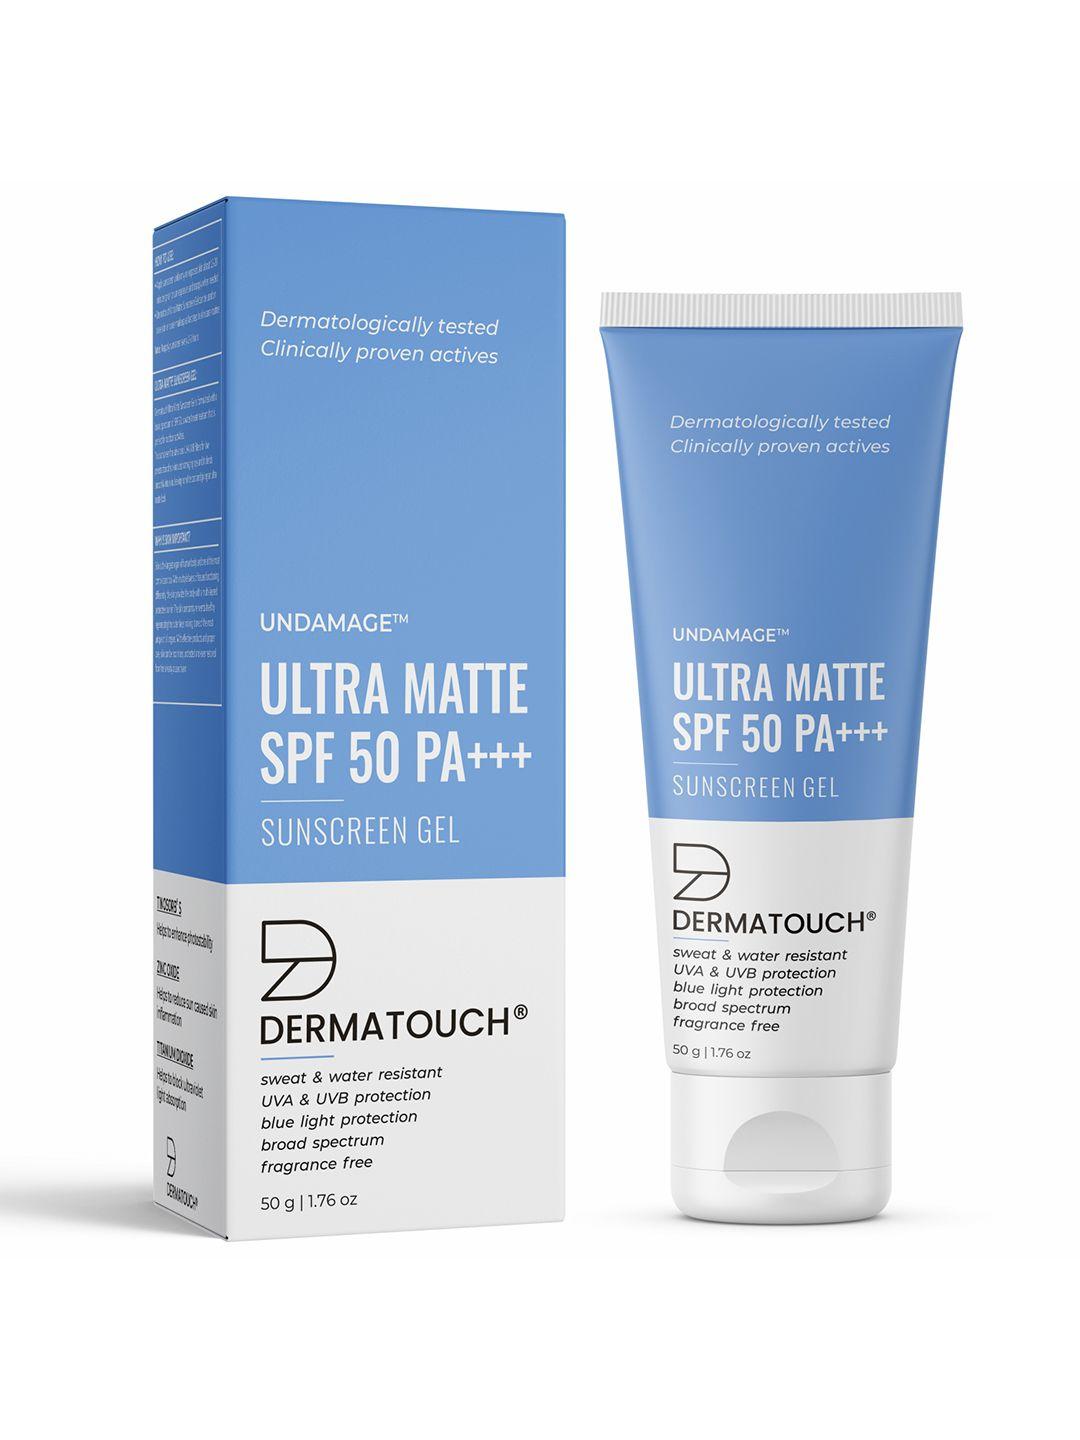 dermatouch undamage ultra matte spf 50 pa+++ sunscreen gel - 50g